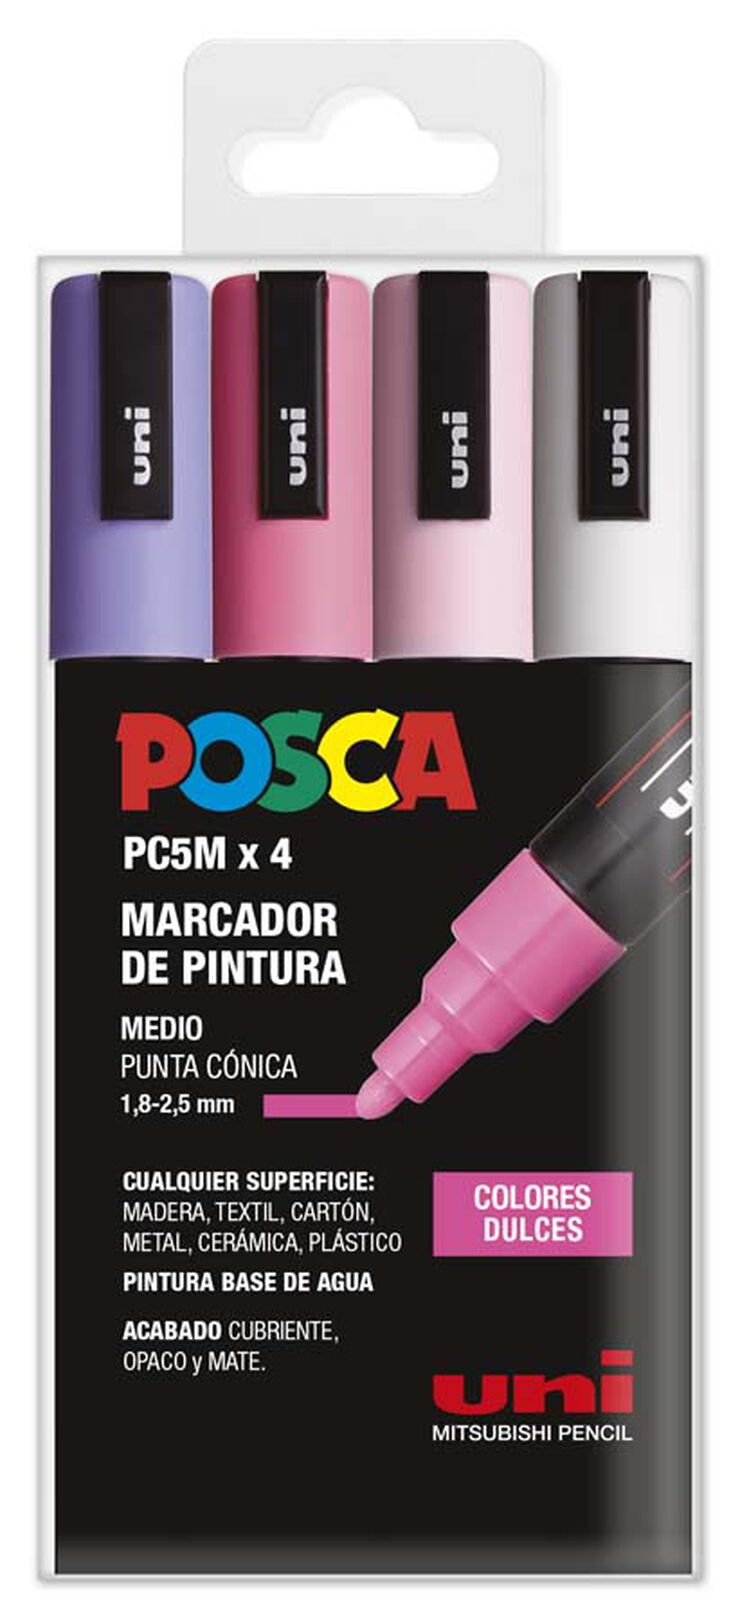 Marcadores Posca PC-5M dulces 4 colores